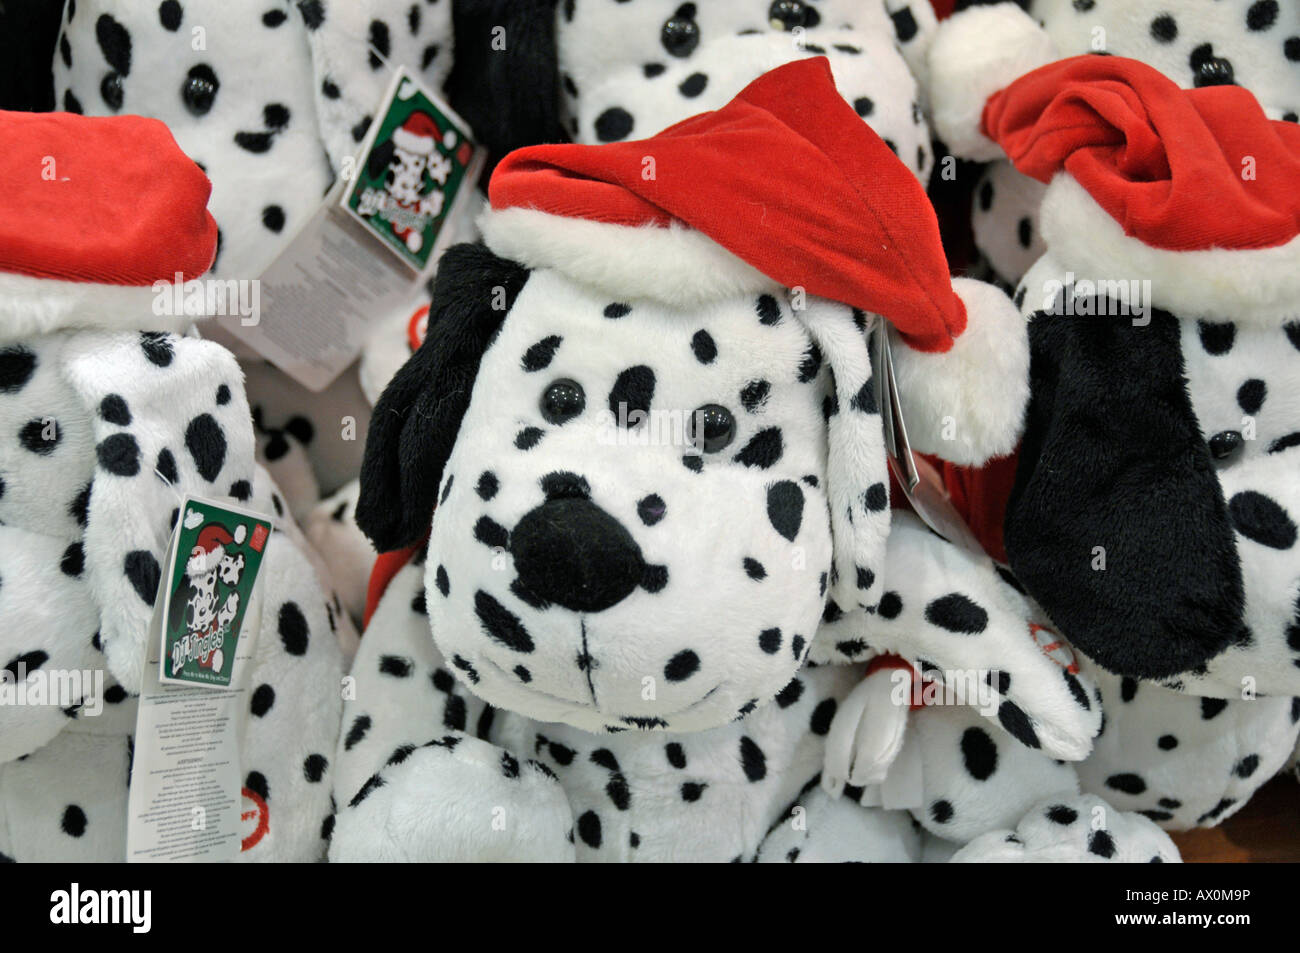 Stuffed dalmatians wearing Santa hats for sale at Sheikh Rashid Terminal, Dubai International Airport, Dubai, United Arab Emira Stock Photo